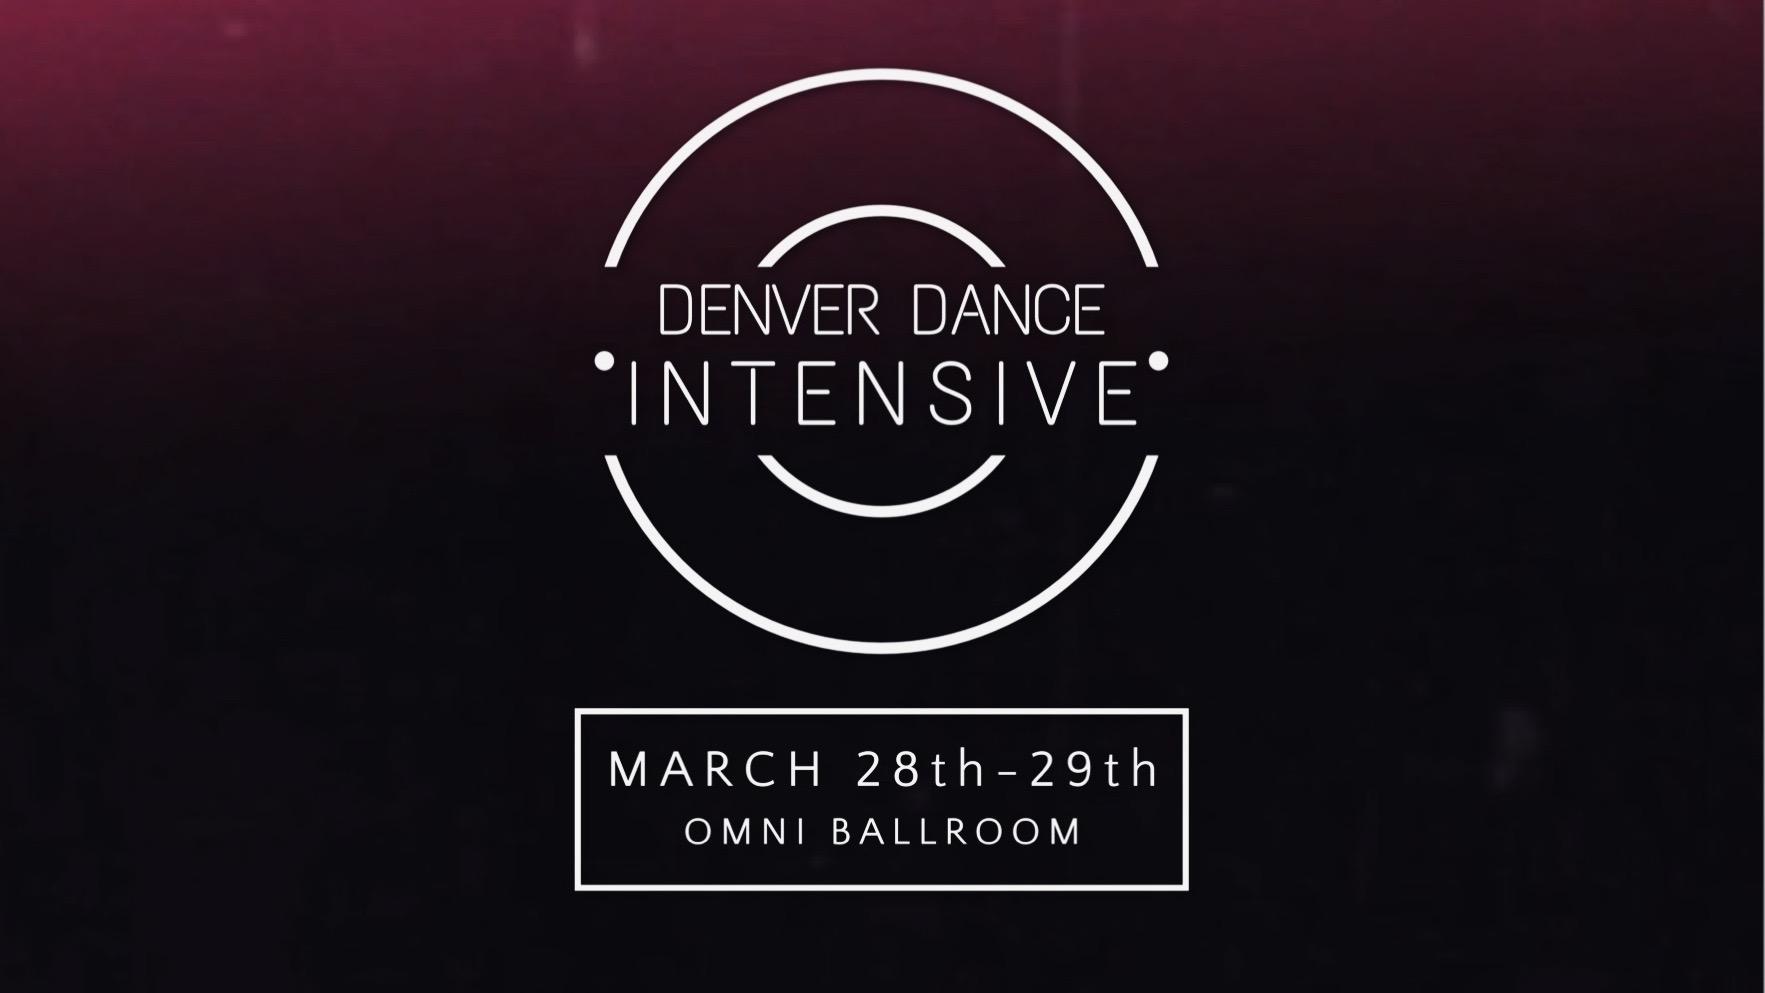 Denver Dance Intensive 2020